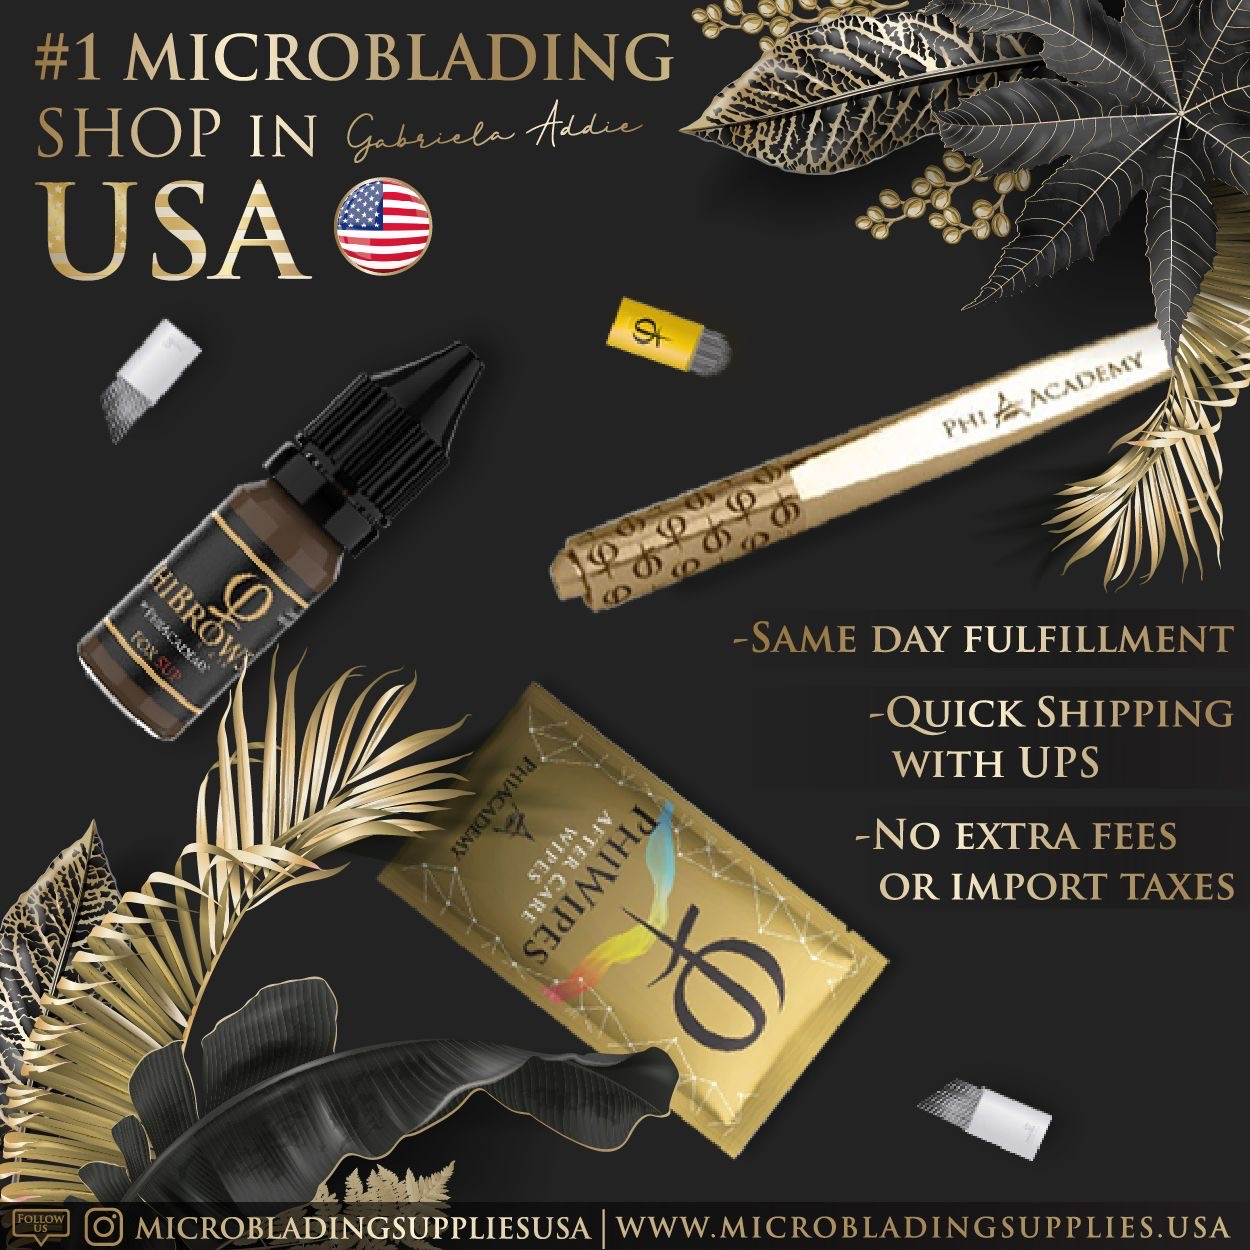 PhiBrows Microblading Supplies USA